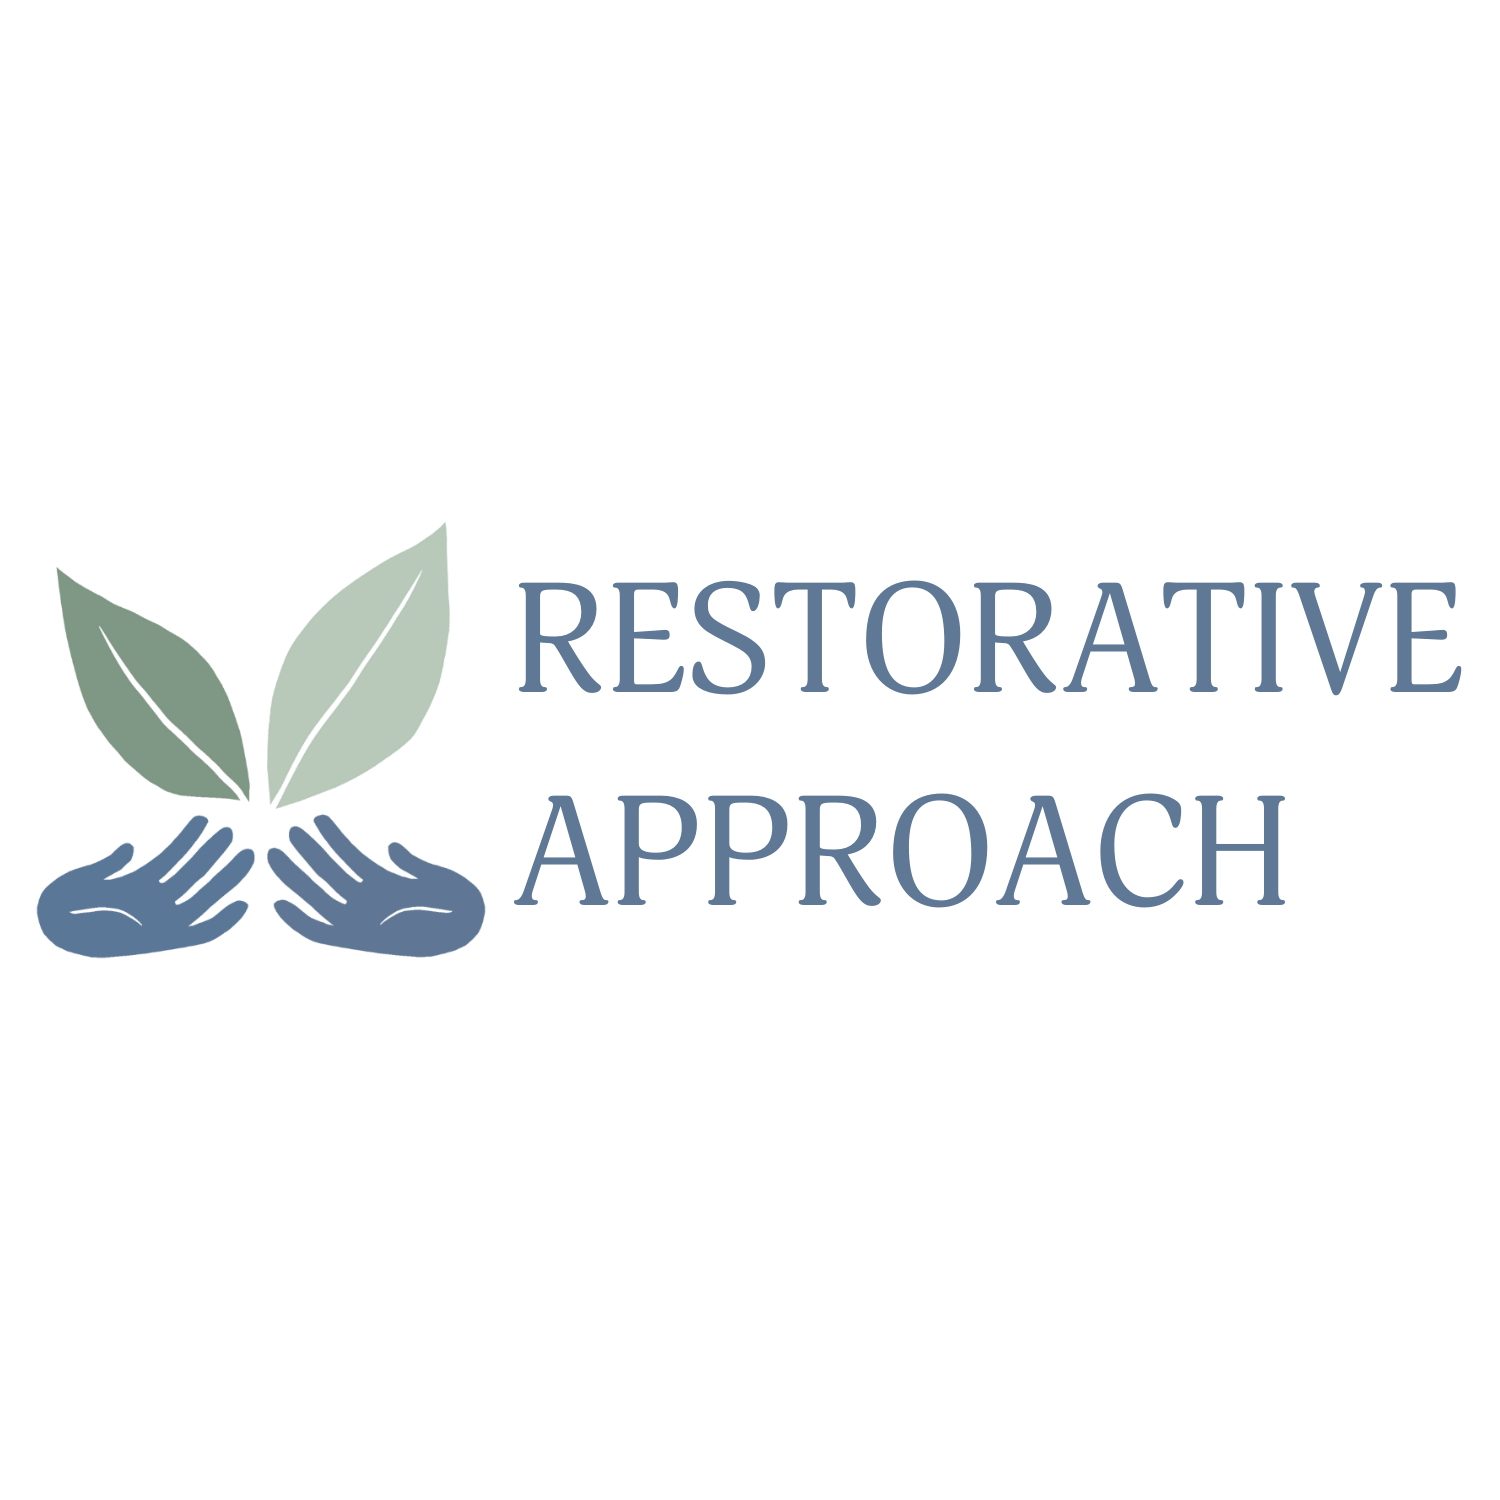 Logo_Text_RestorativeApproach